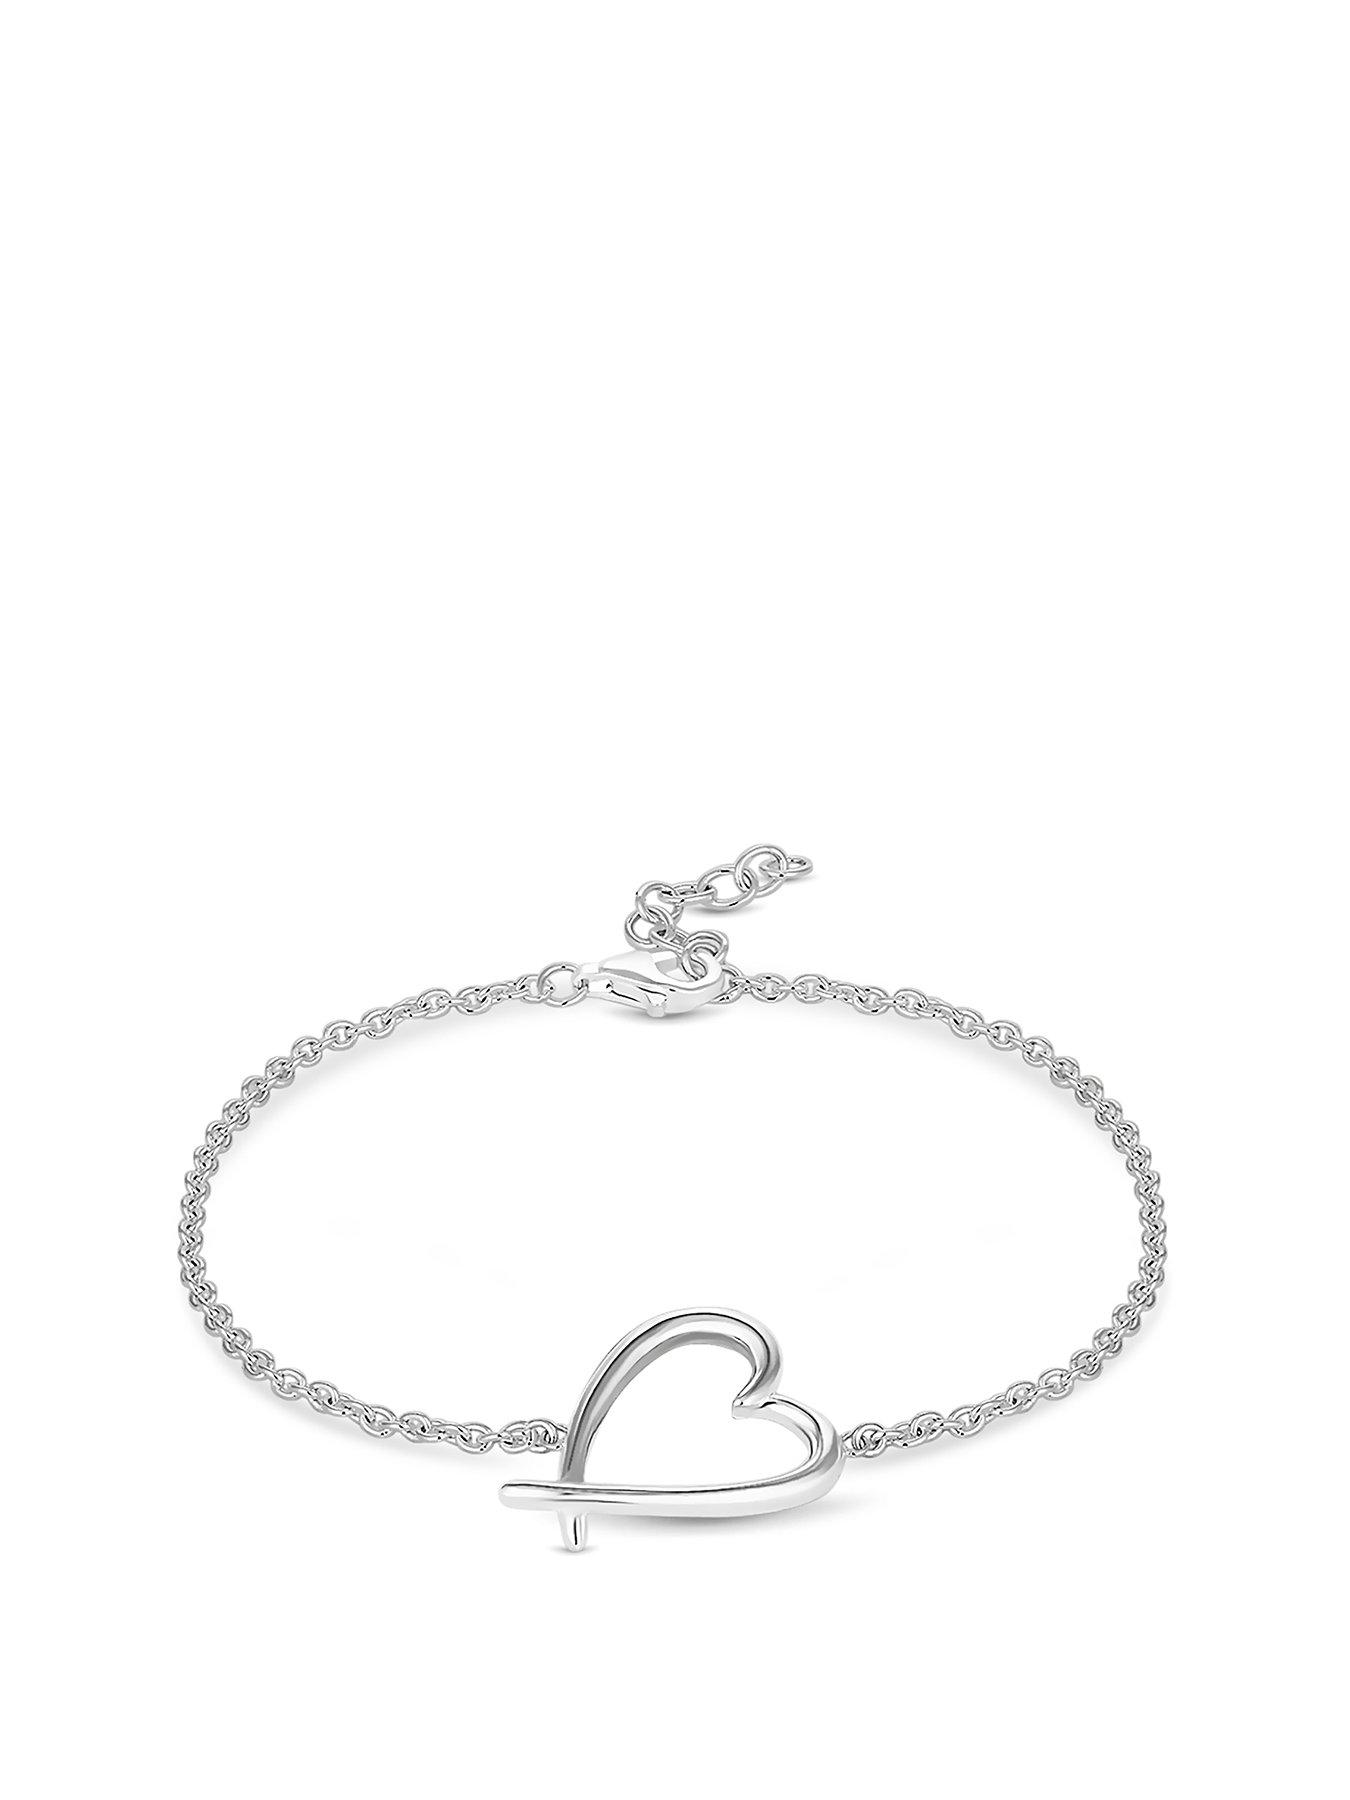  Sterling Silver 925 Polished Open Heart Bracelet